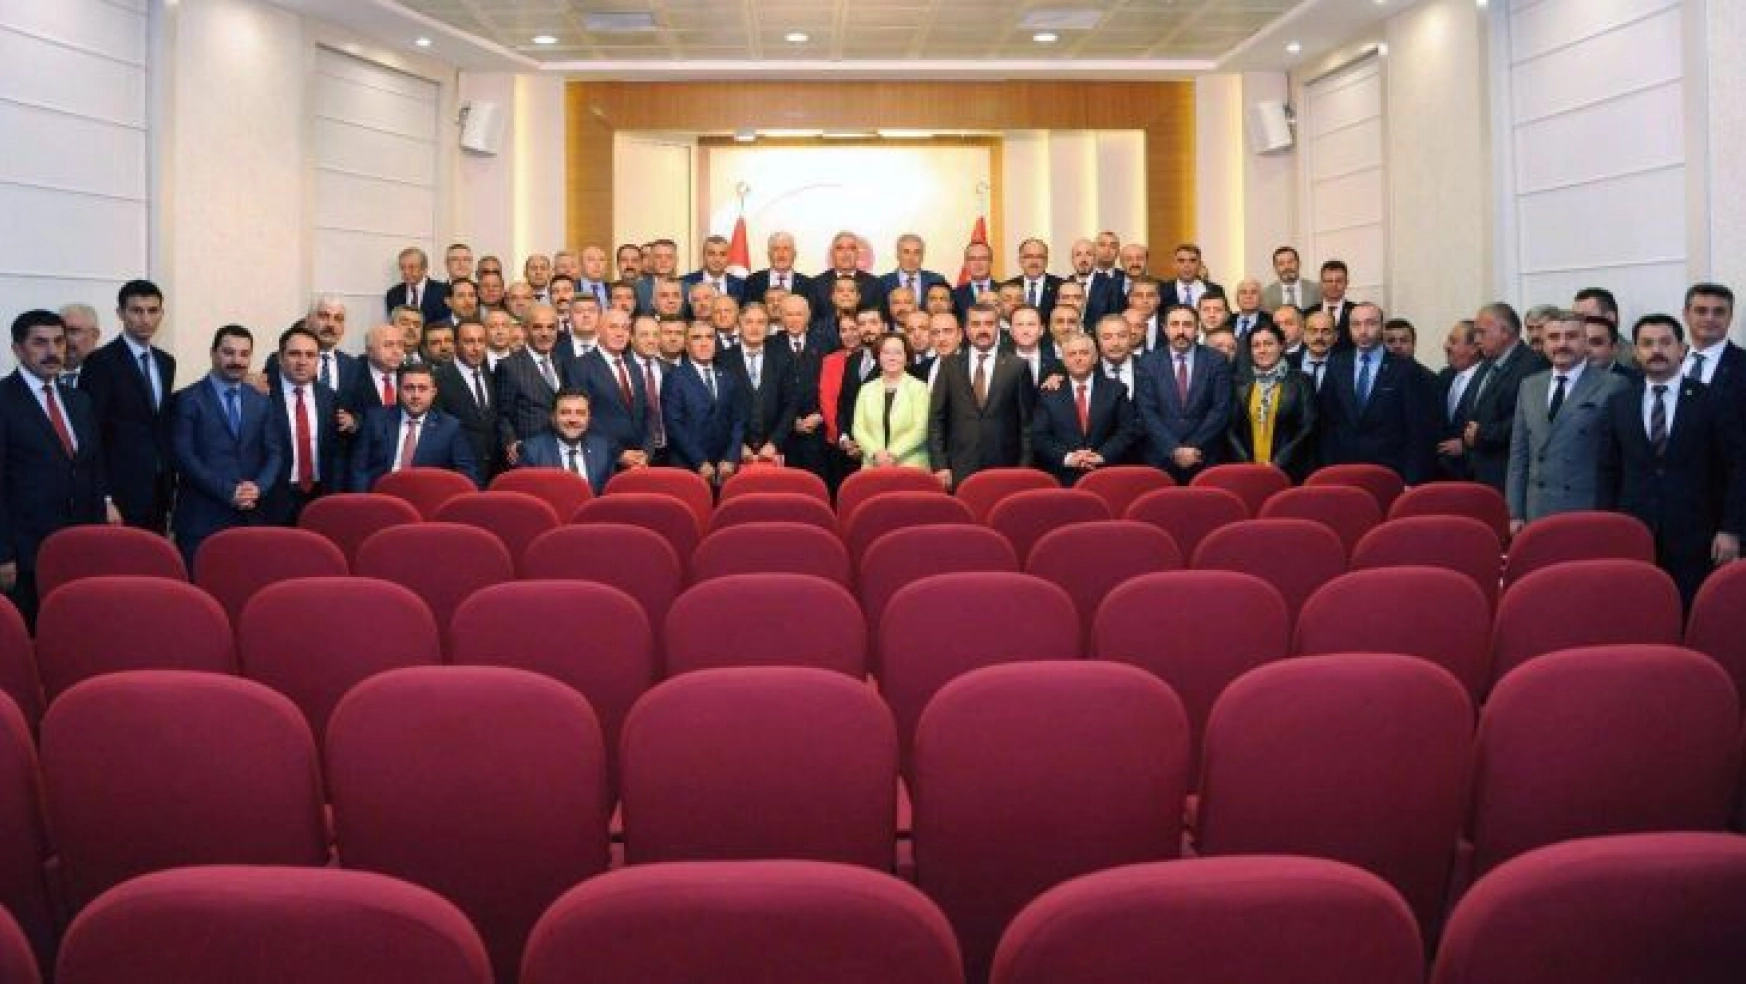 Mhp İl Başkanı Avşar, 'İl Başkanları Toplantısı Verimli Geçmiştir'